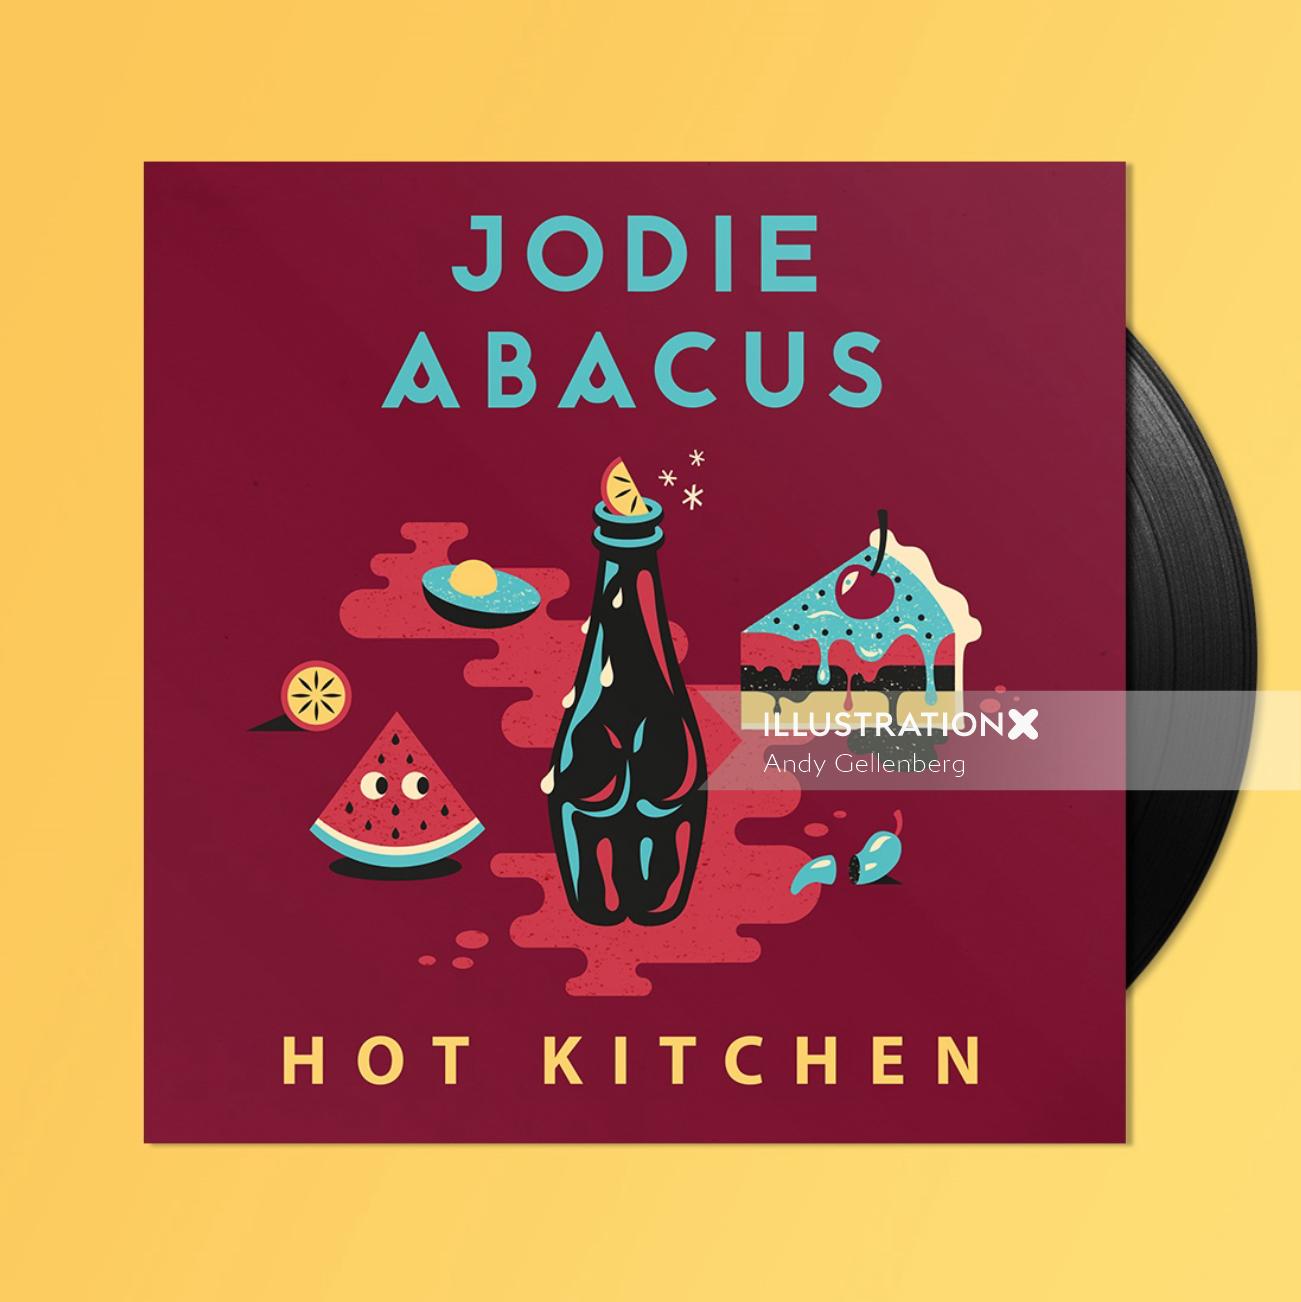 Graphic Jodie Abacus Hot Kitchen
